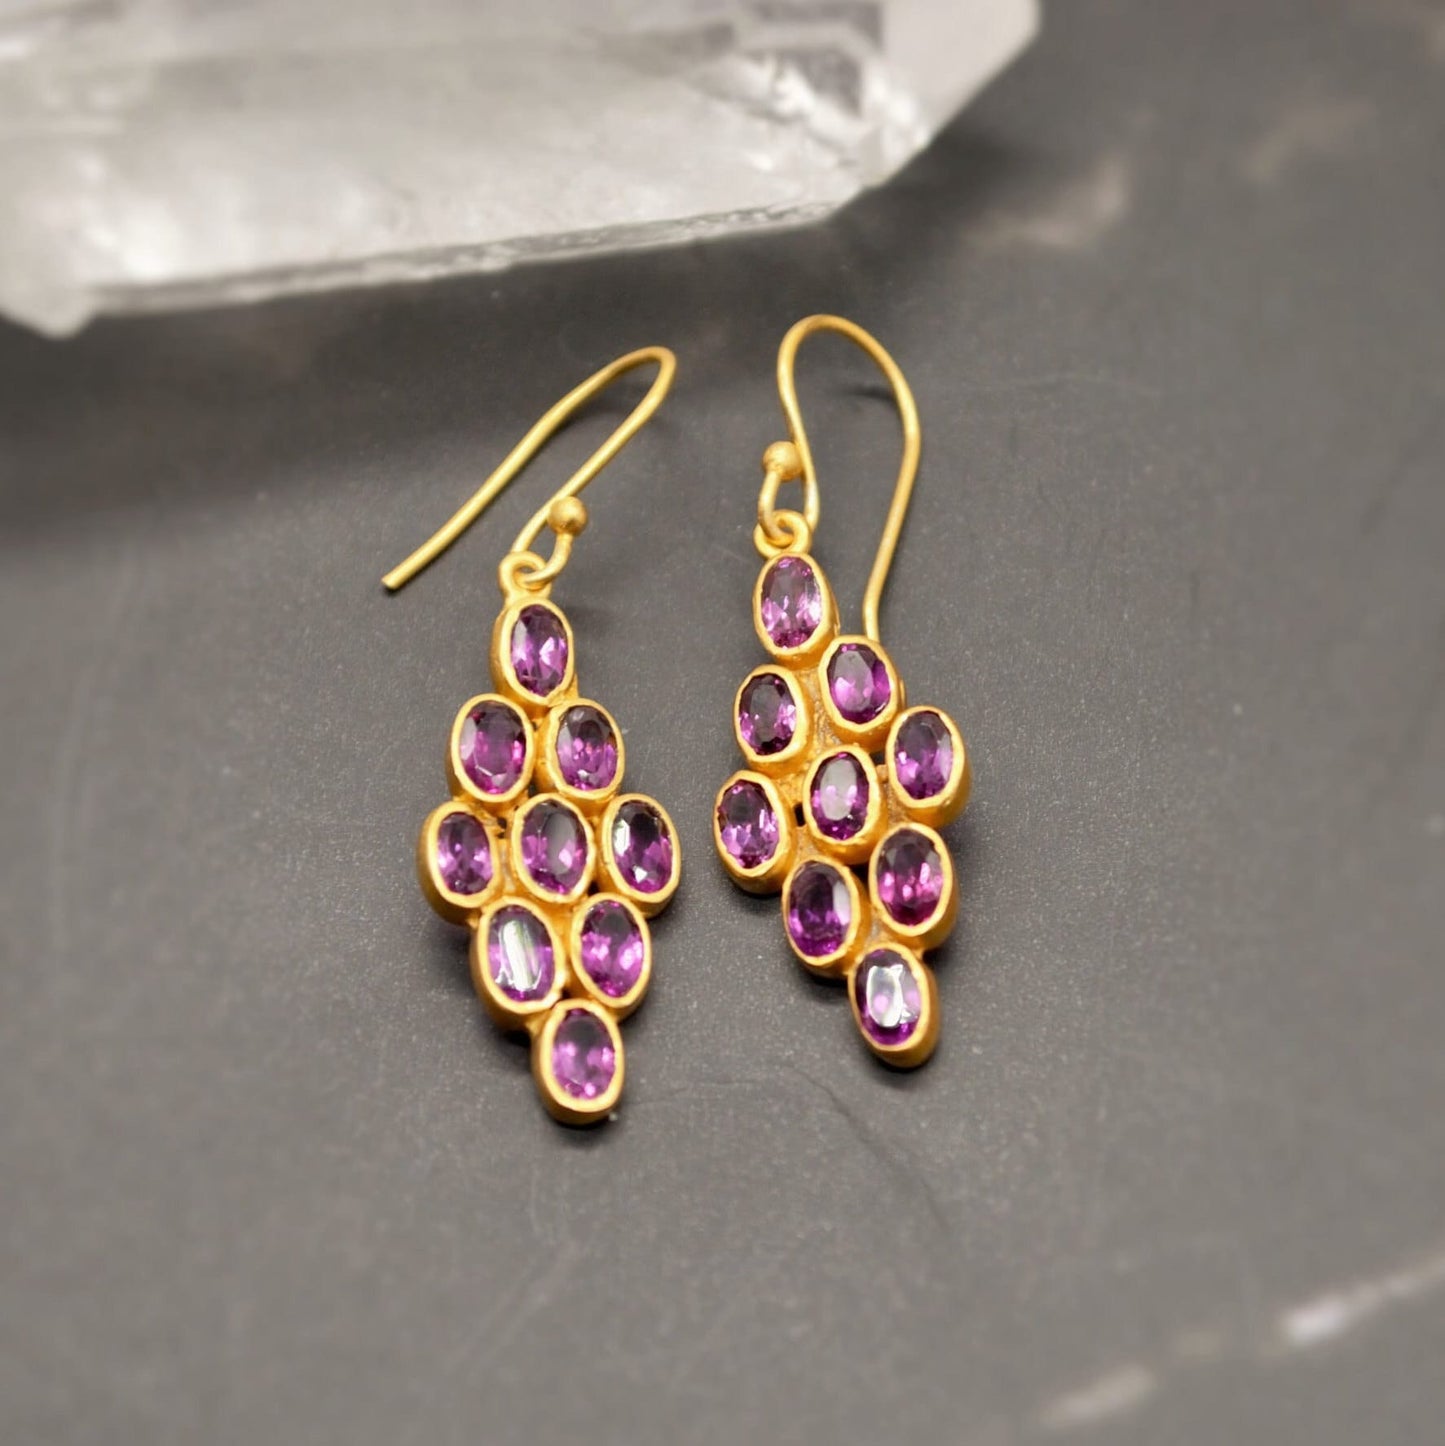 Rhodolite Garnet Sterling Silver Earrings - Red Pink Gemstone - January Birthstone Jewelry - Gift for Her